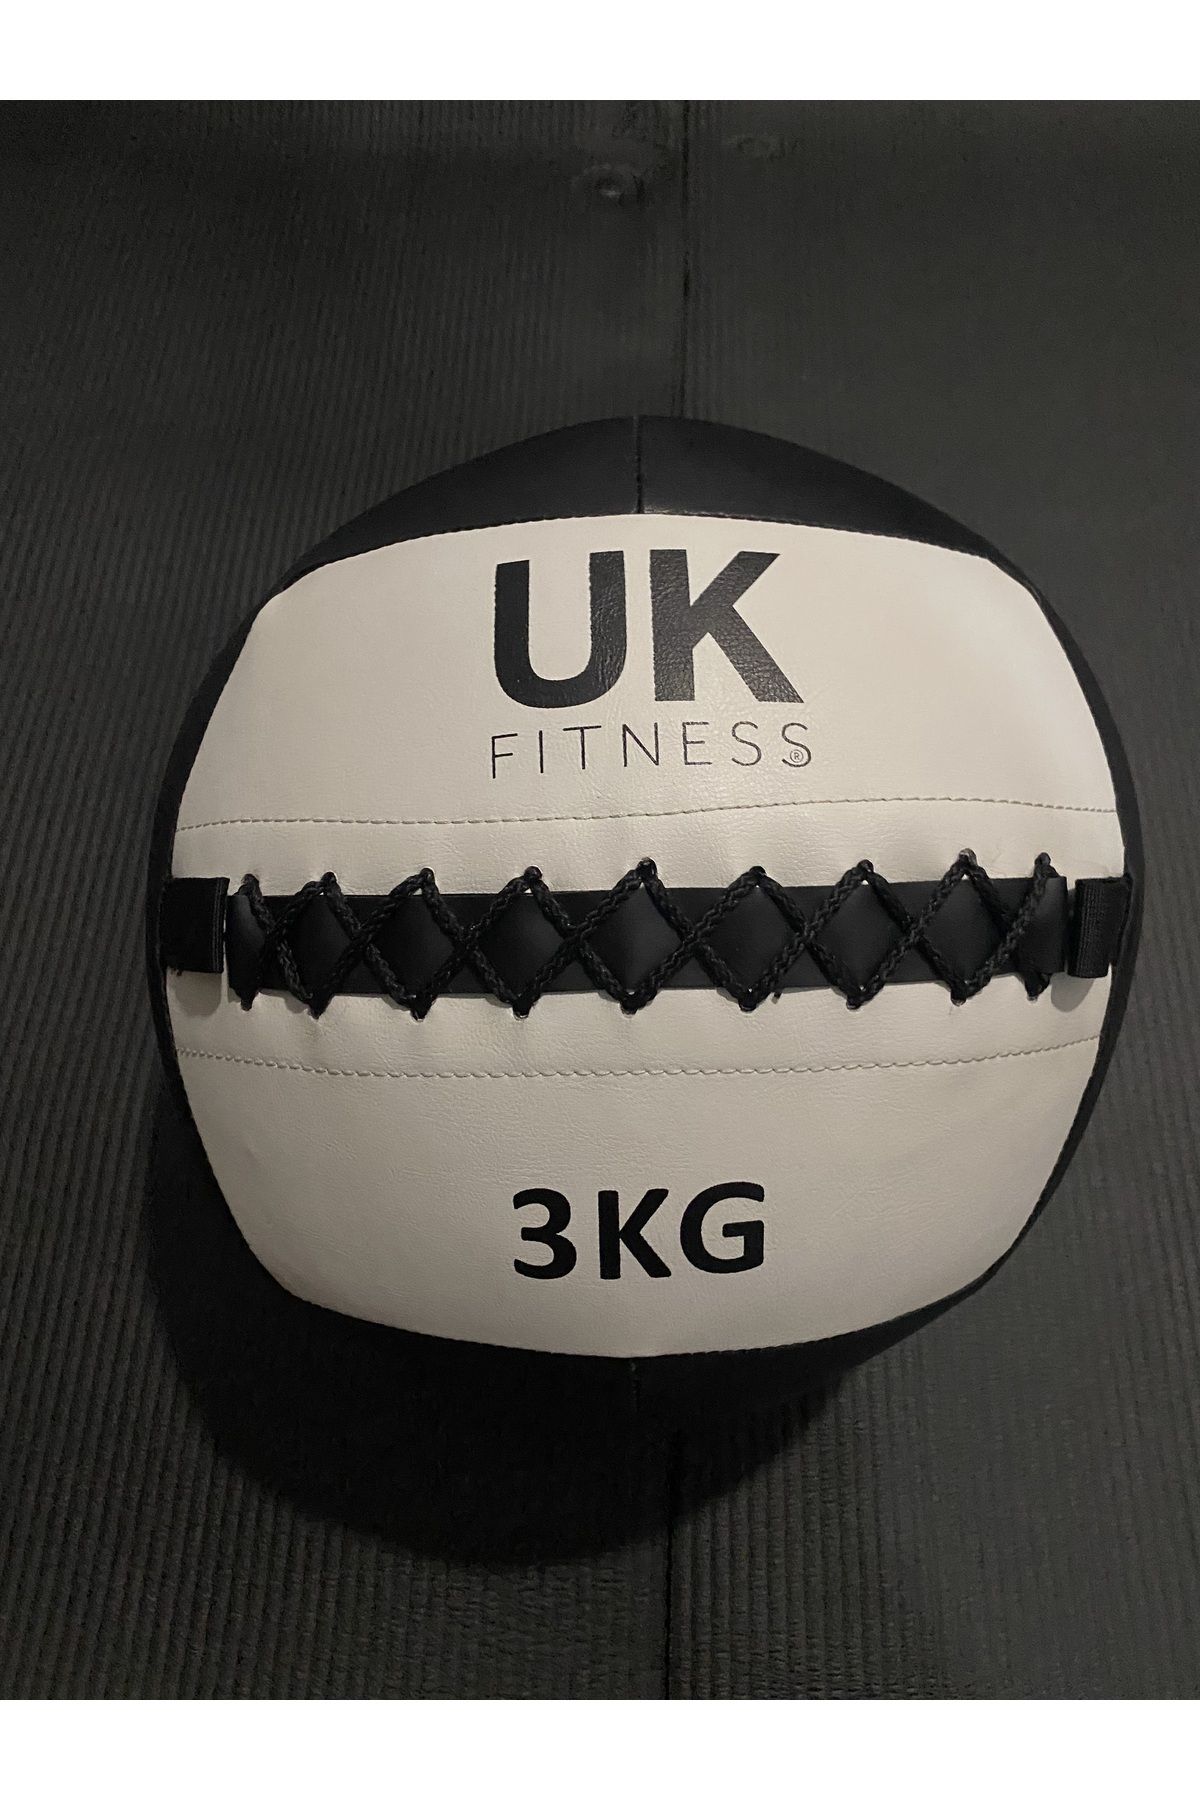 UK FİTNESS Uk Fitness Crossfit Gym Deri Sağlık/duvar Topu Medicine/wall Ball 3 Kg Pro